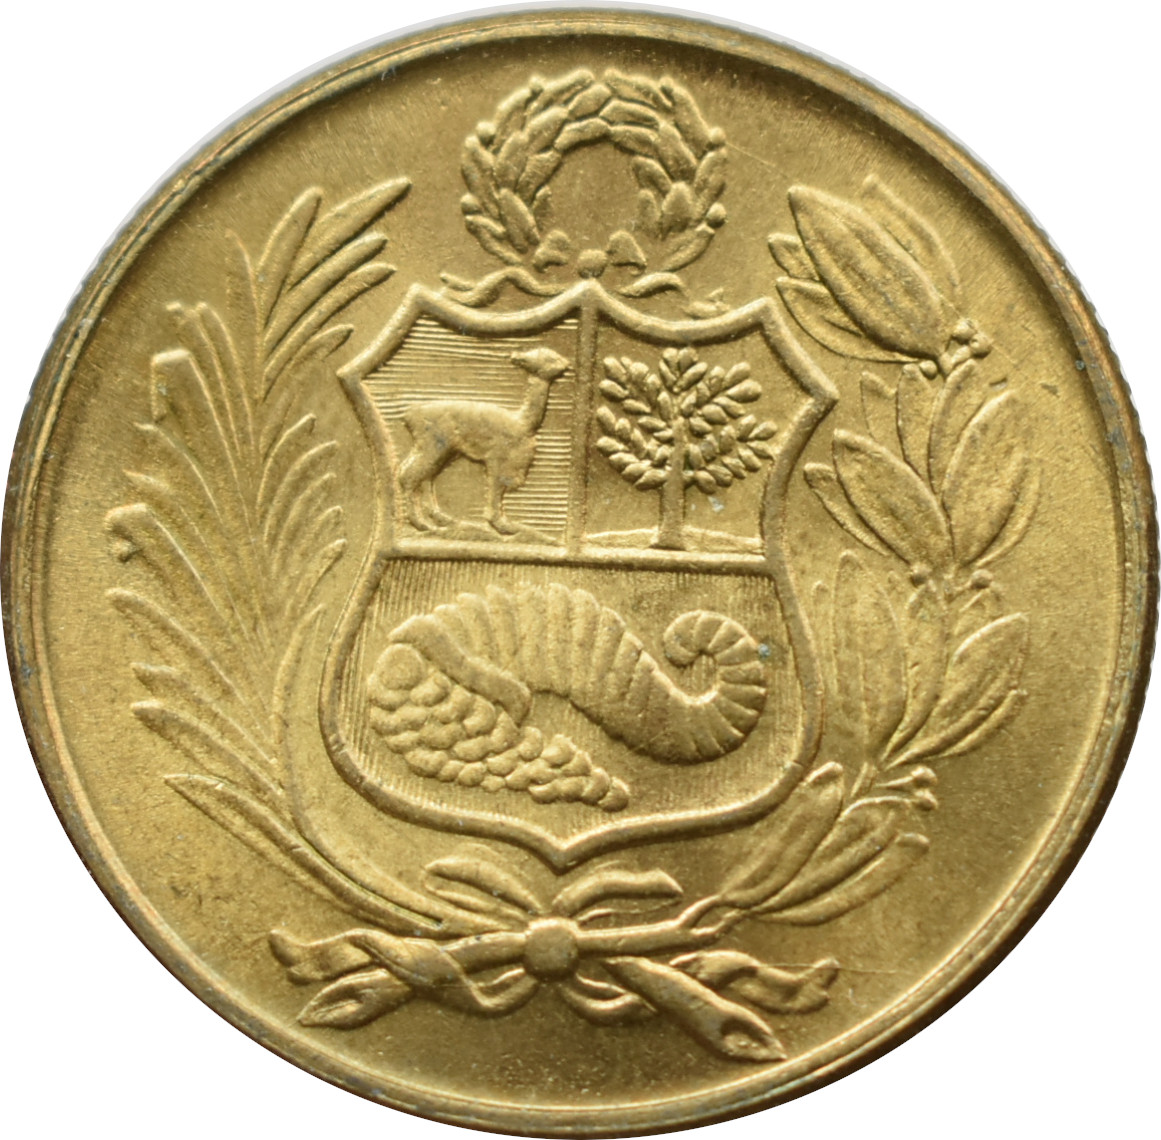 Peru 50 Soles de Oro 1981